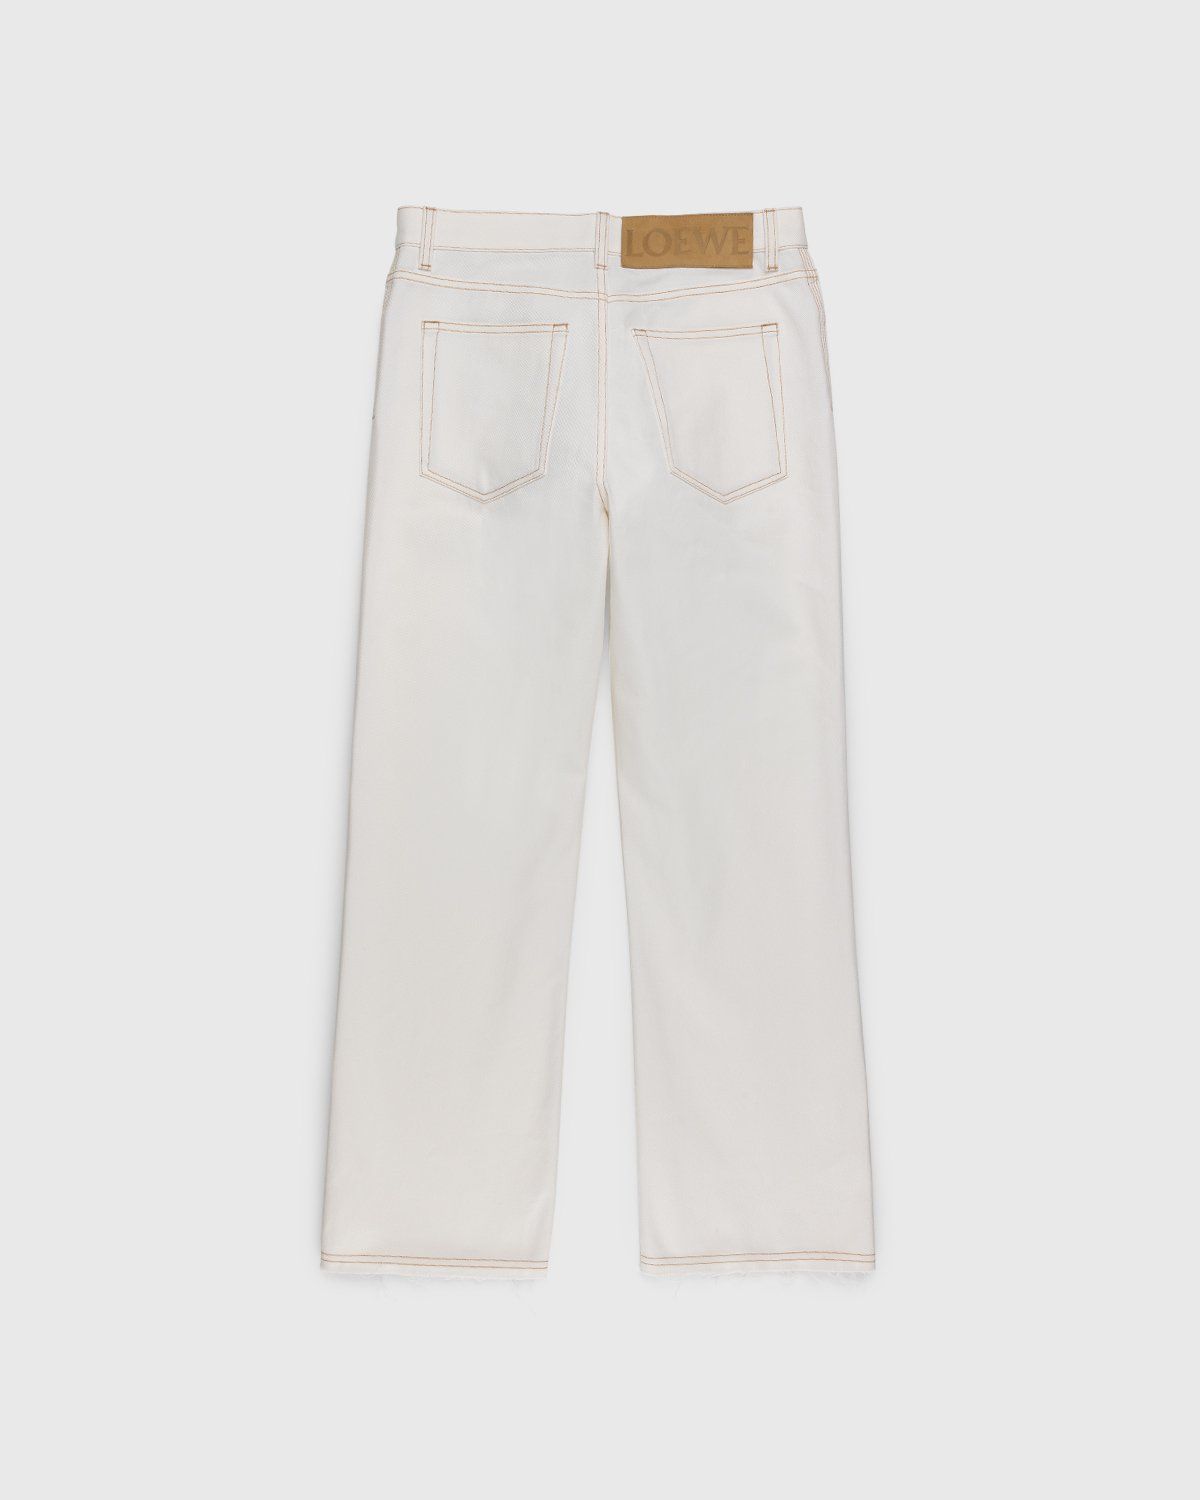 Loewe – Paula's Ibiza Boot Cut Denim Trousers White | Highsnobiety Shop